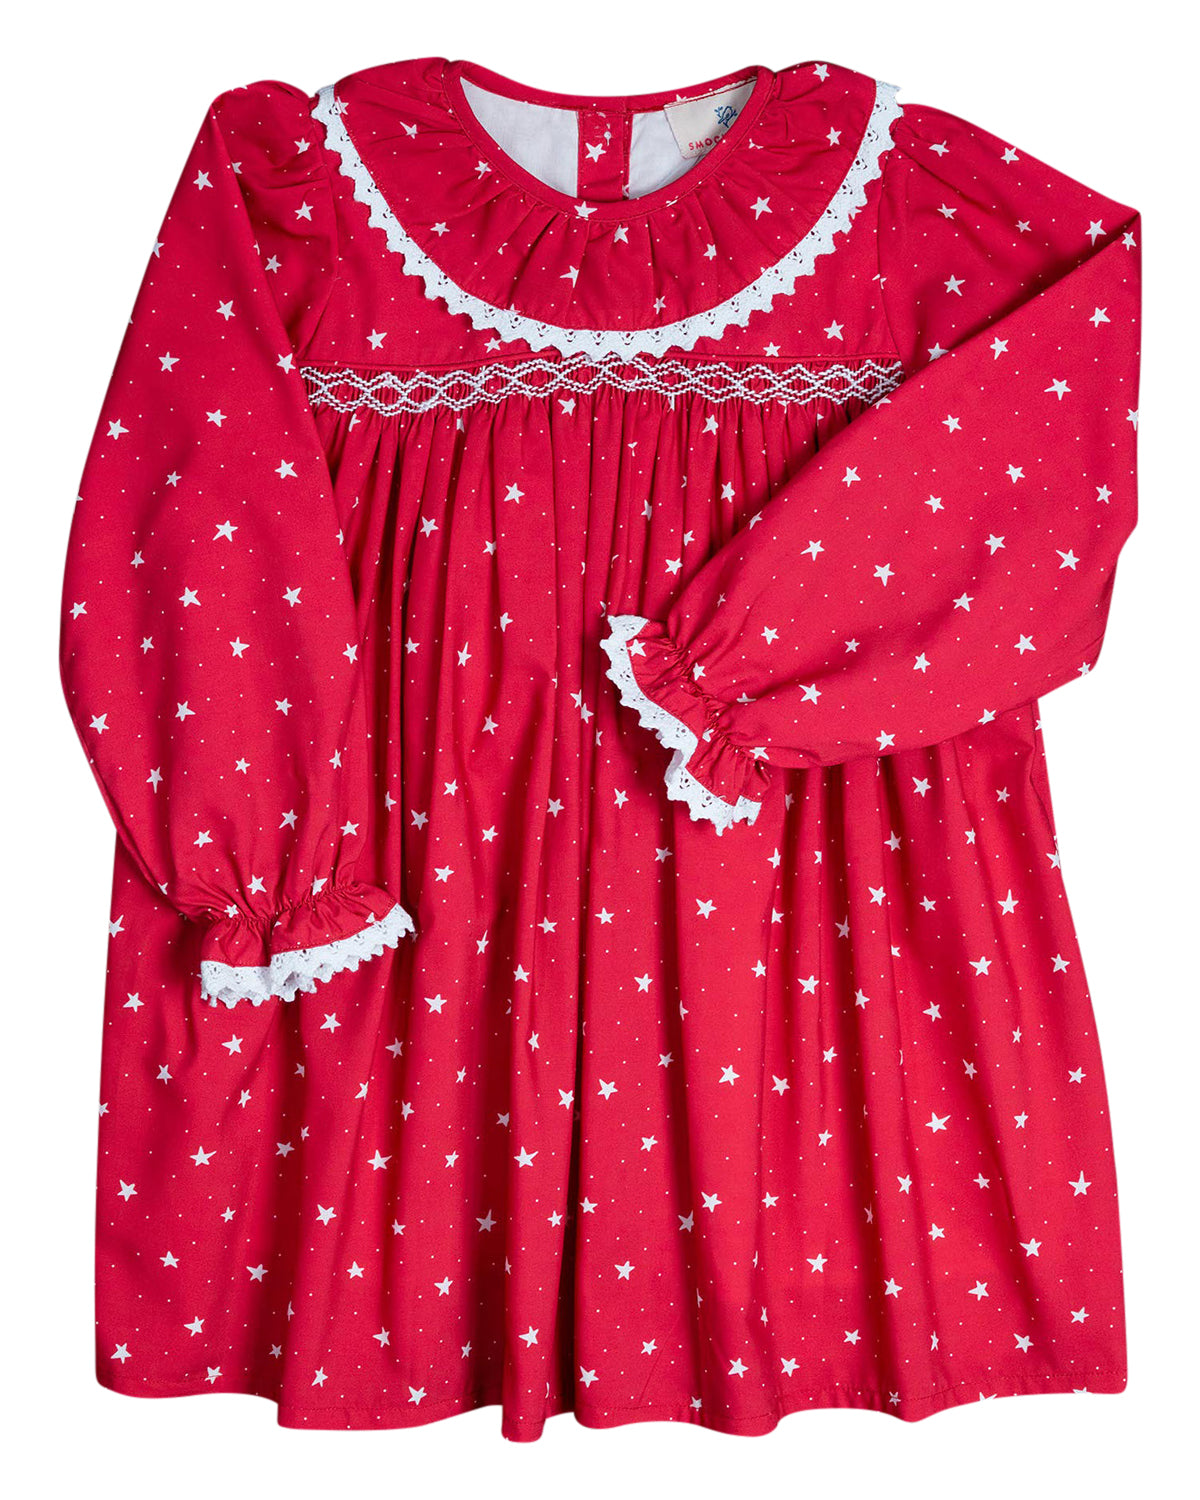 Red Star Print Smocked Dress